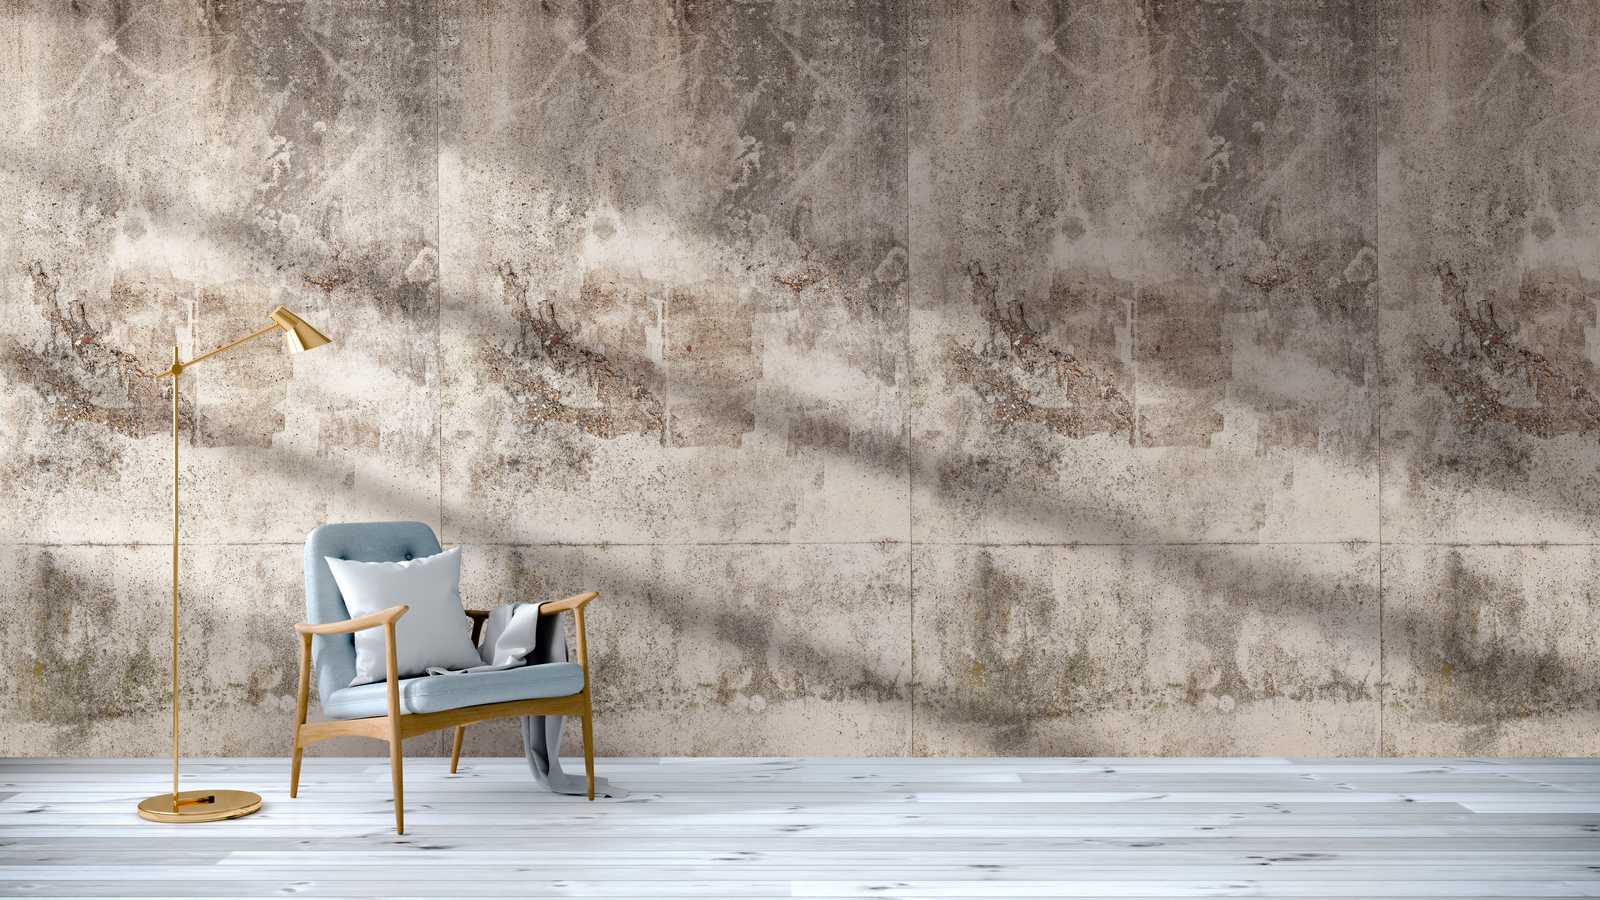             behang nieuwigheid | motief behang betonnen muur rustiek met used look
        